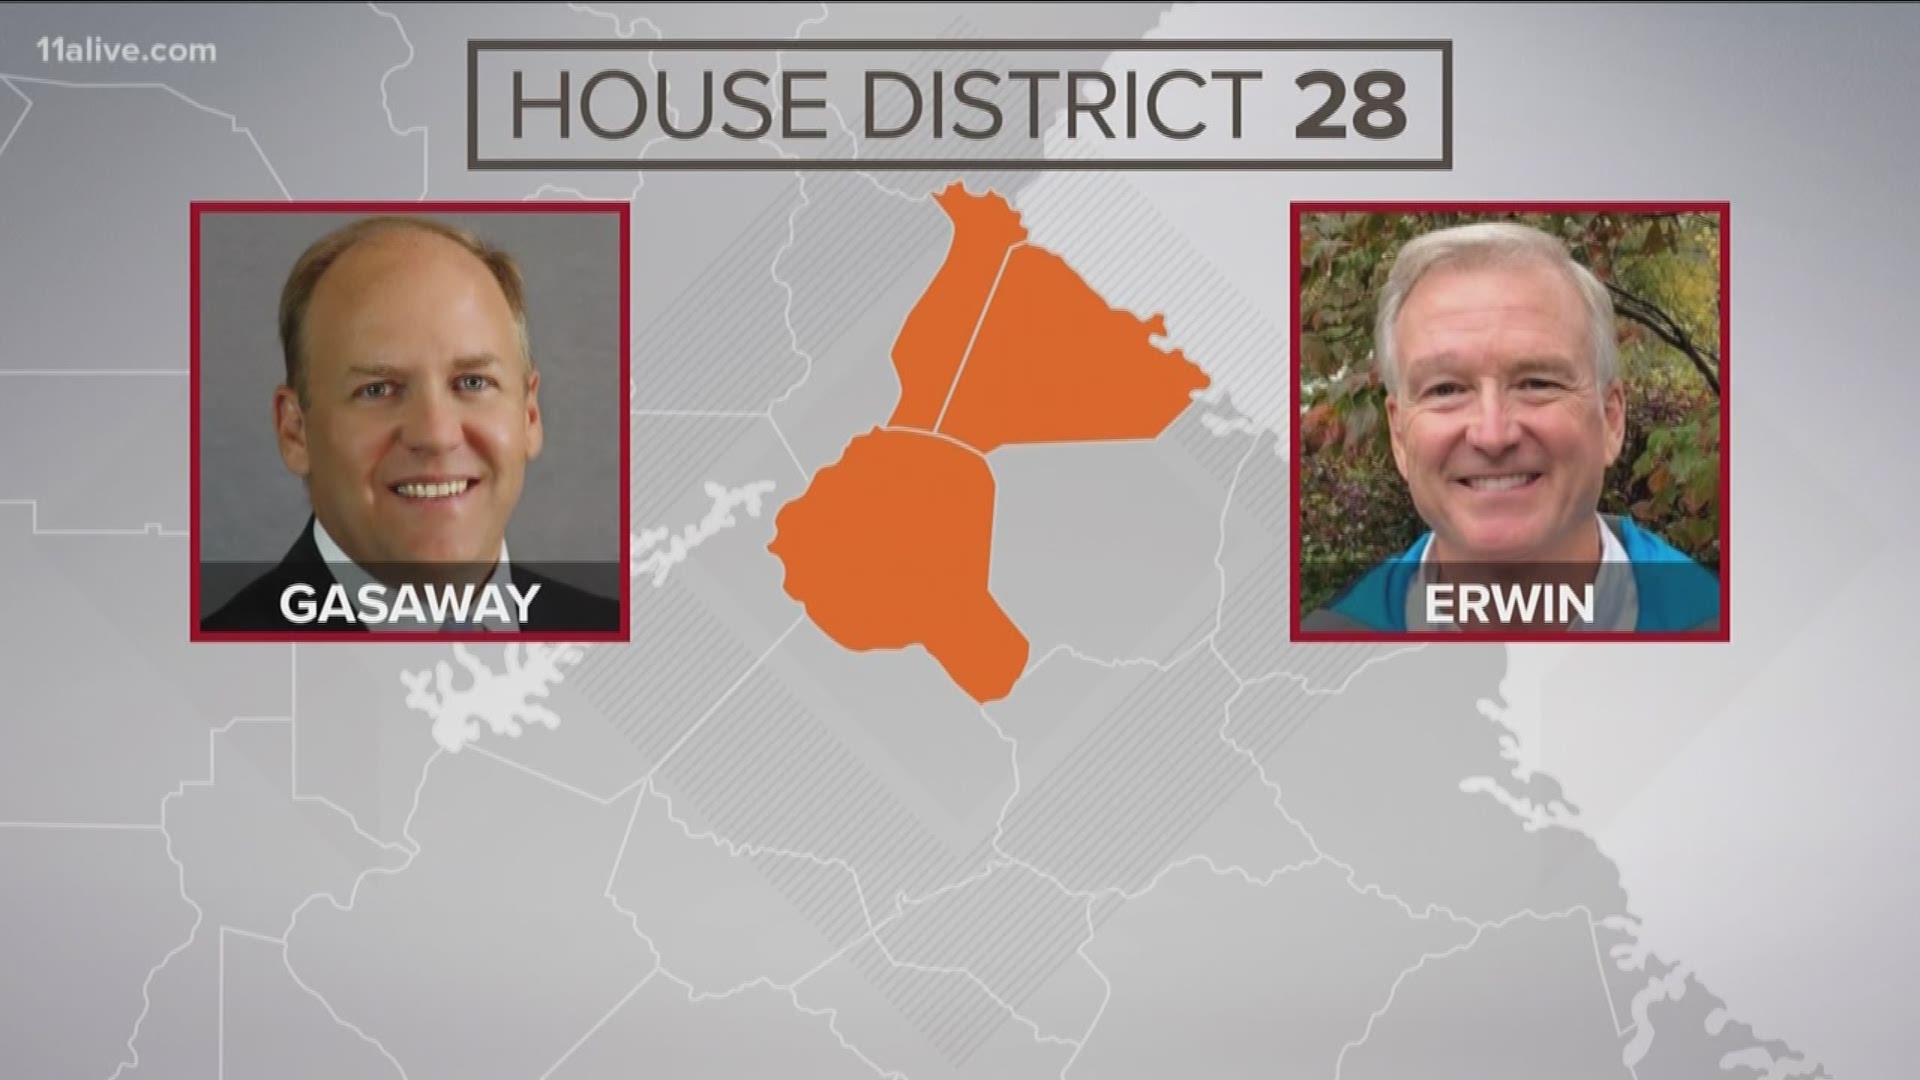 Chris Erwin is in the race with incumbent Dan Gasaway.